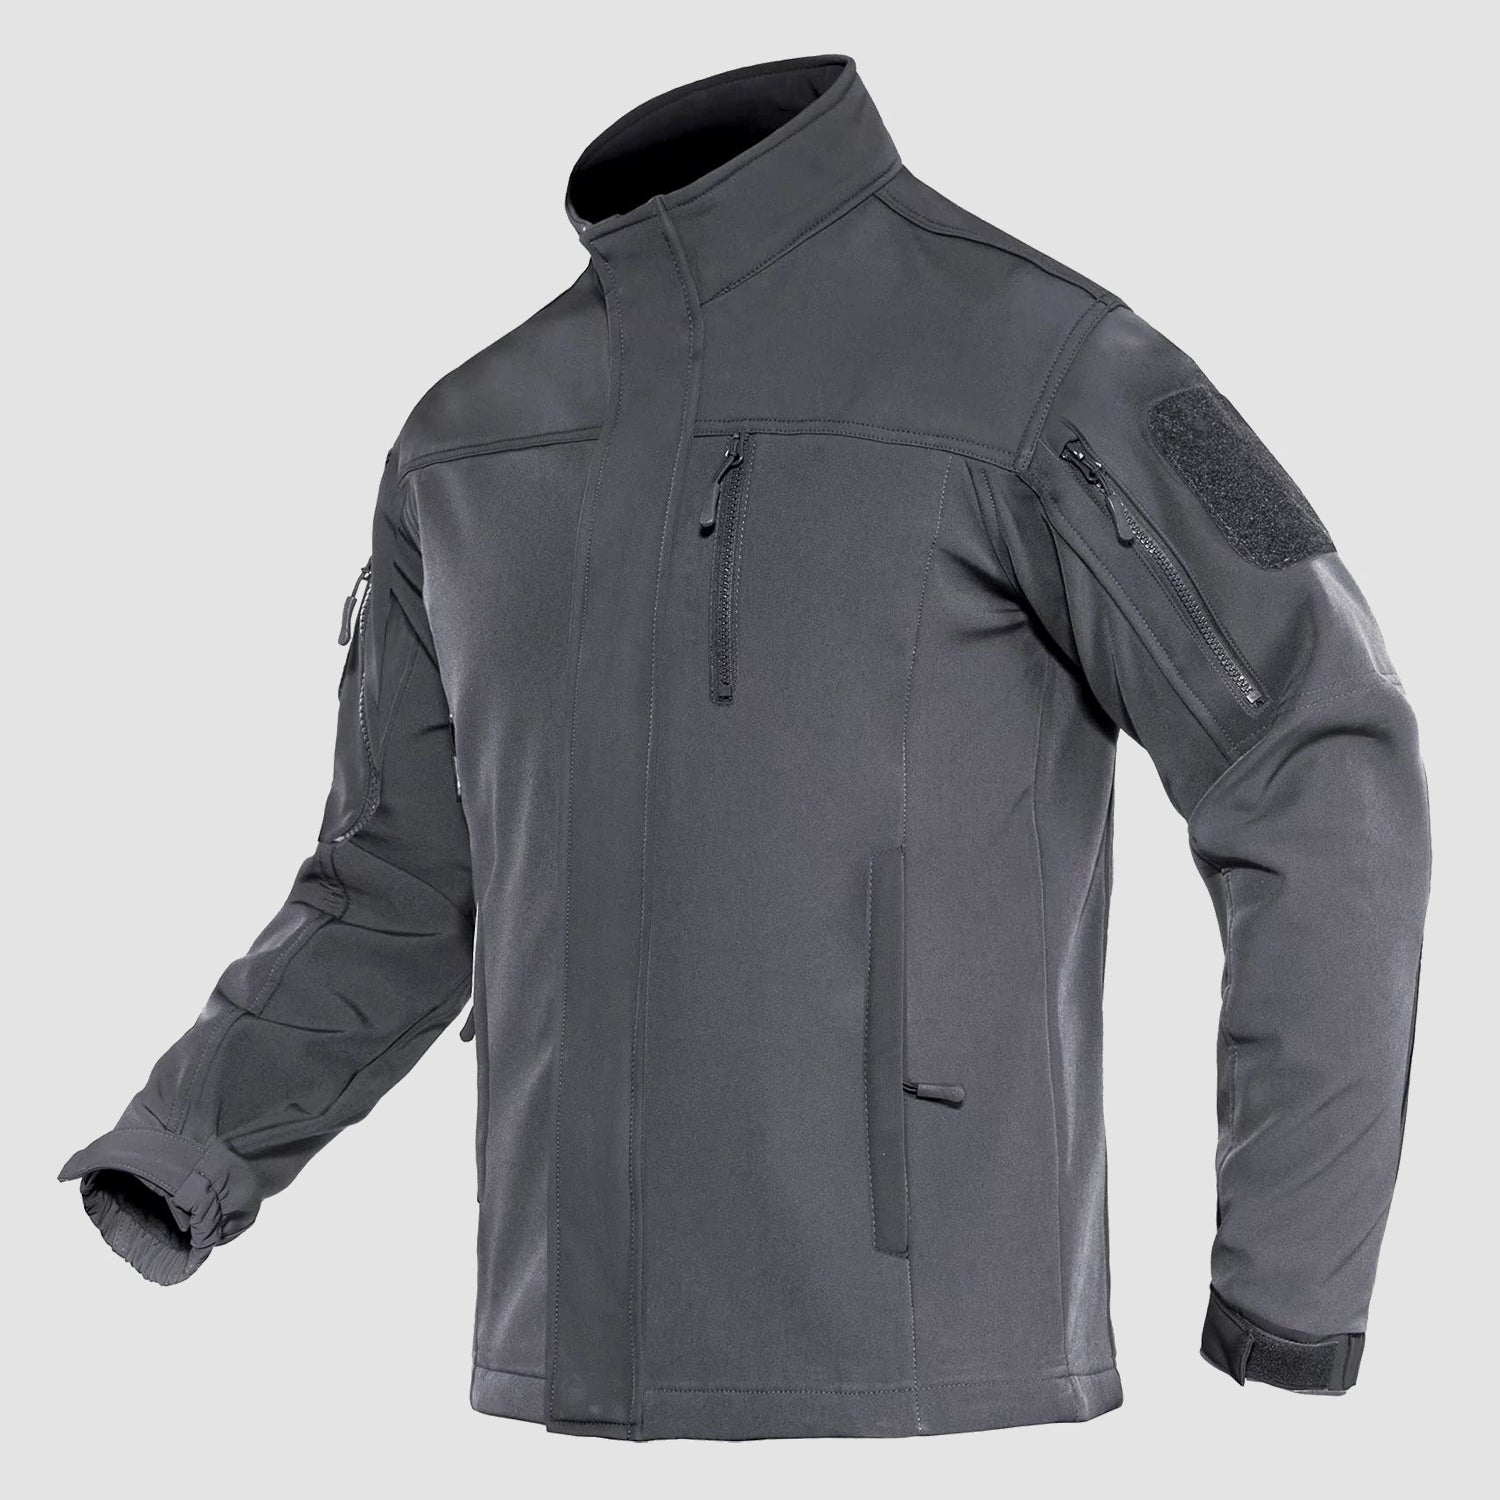 Men's Tactical Jacket | Hiking Winter Jacket | MAGCOMSEN